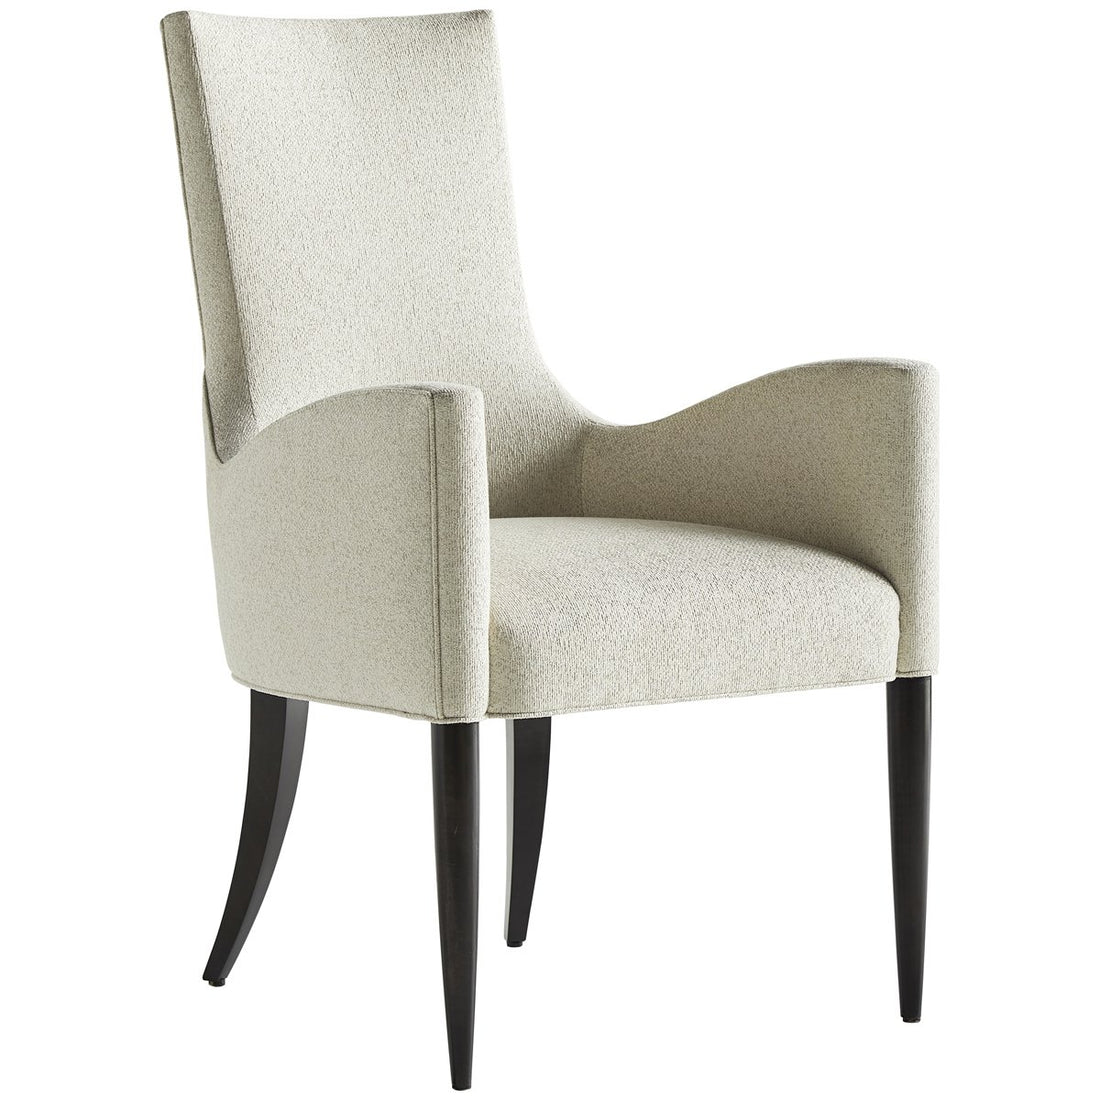 Vanguard Furniture Lillet Arm Chair